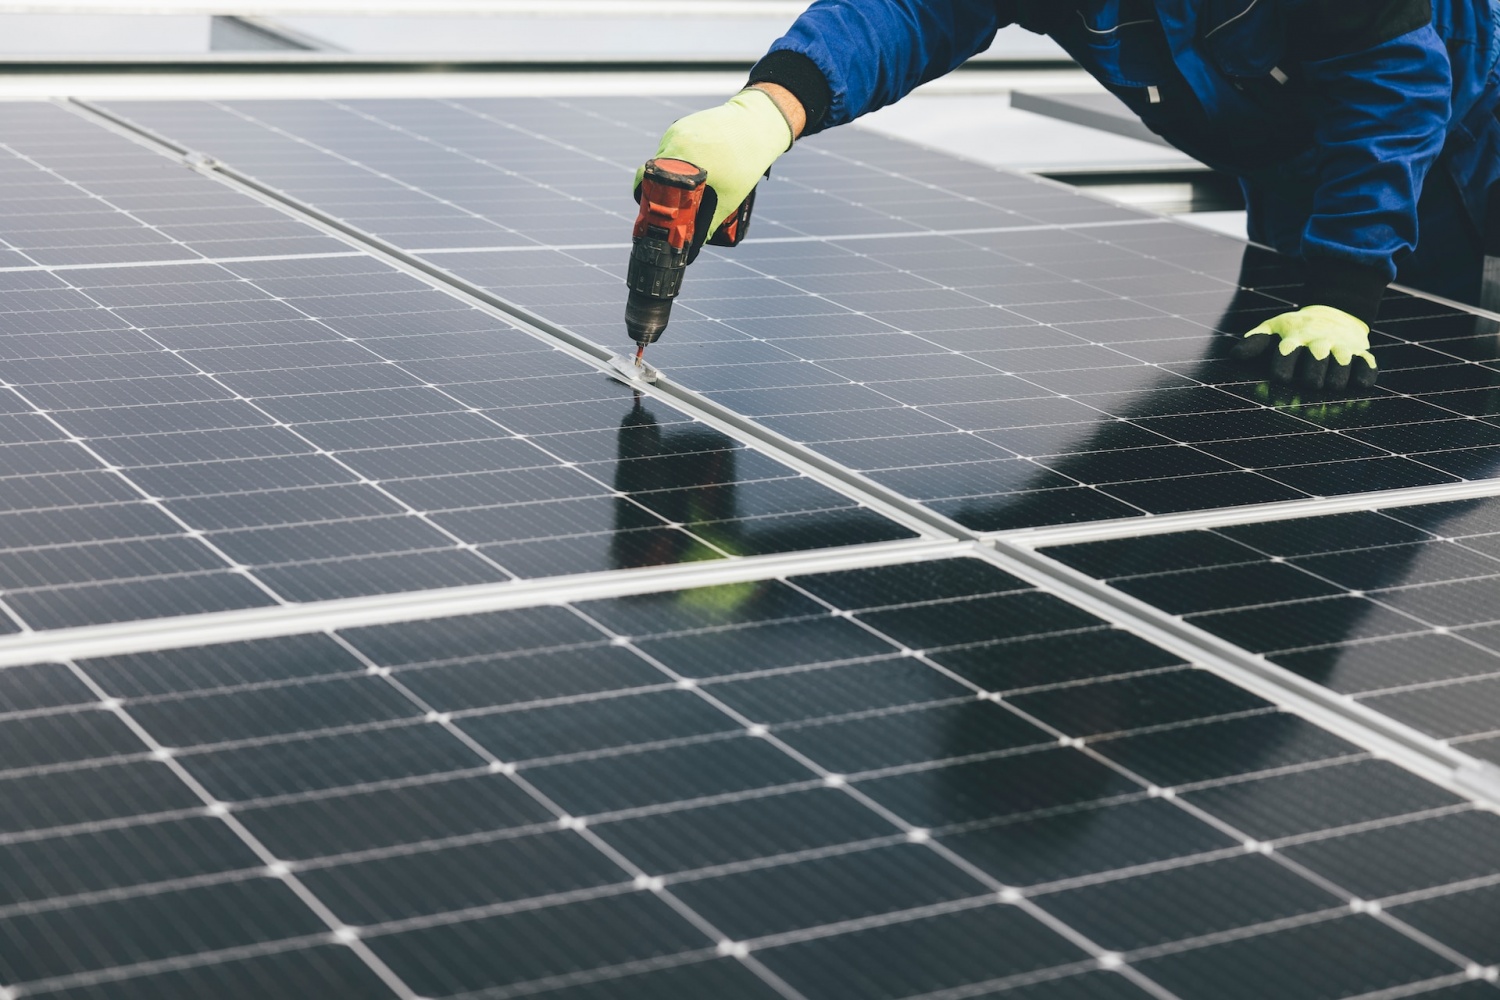  Installing renewable power generation solar panels